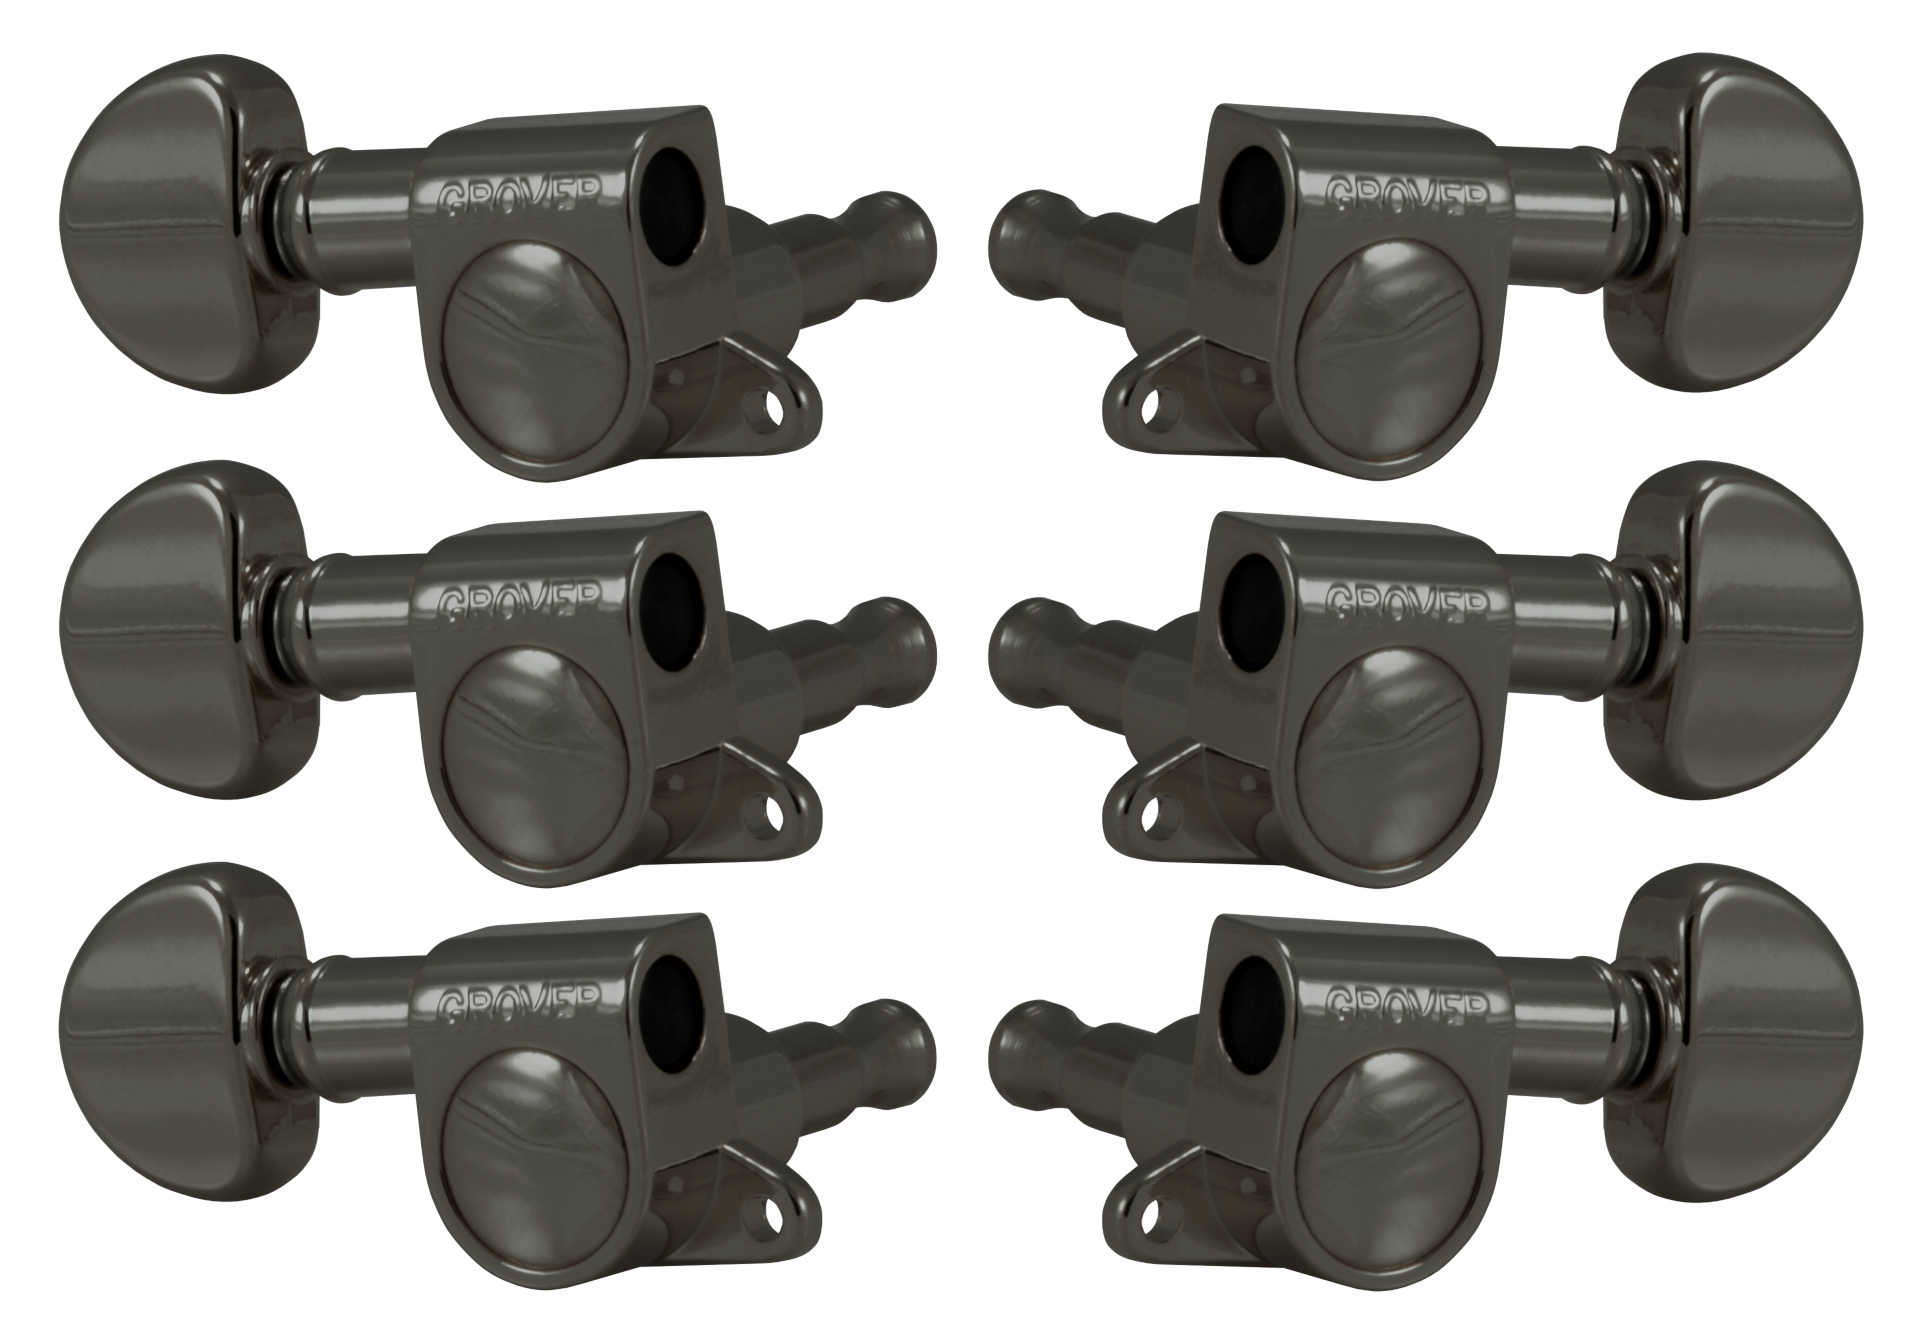 Grover 205BN Mini Rotomatics with Round Button - Guitar Machine Heads, 3 + 3 - Black Nickel